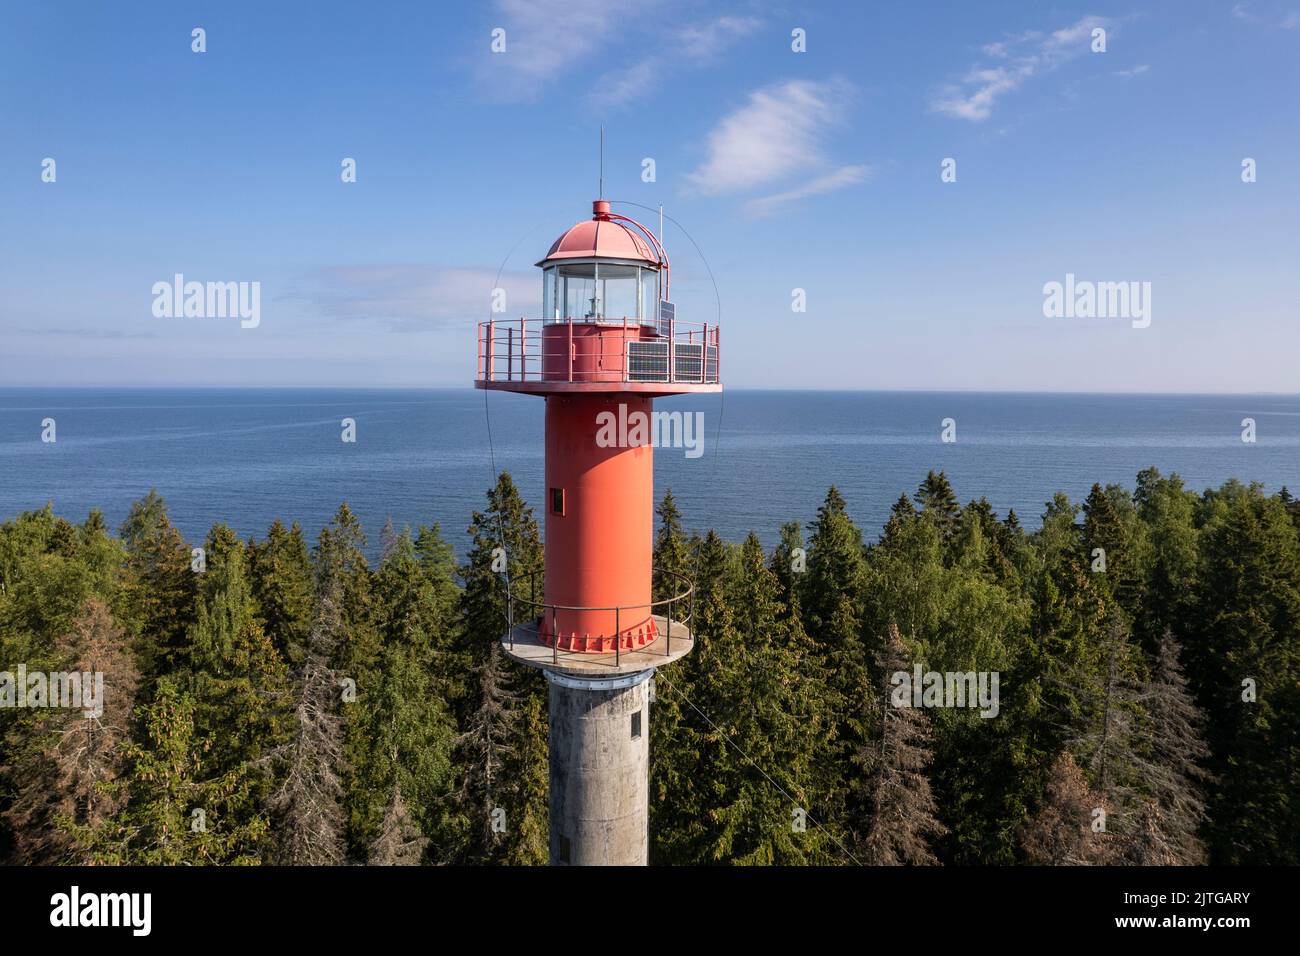 Juminda lighthouse in Estonia Stock Photo